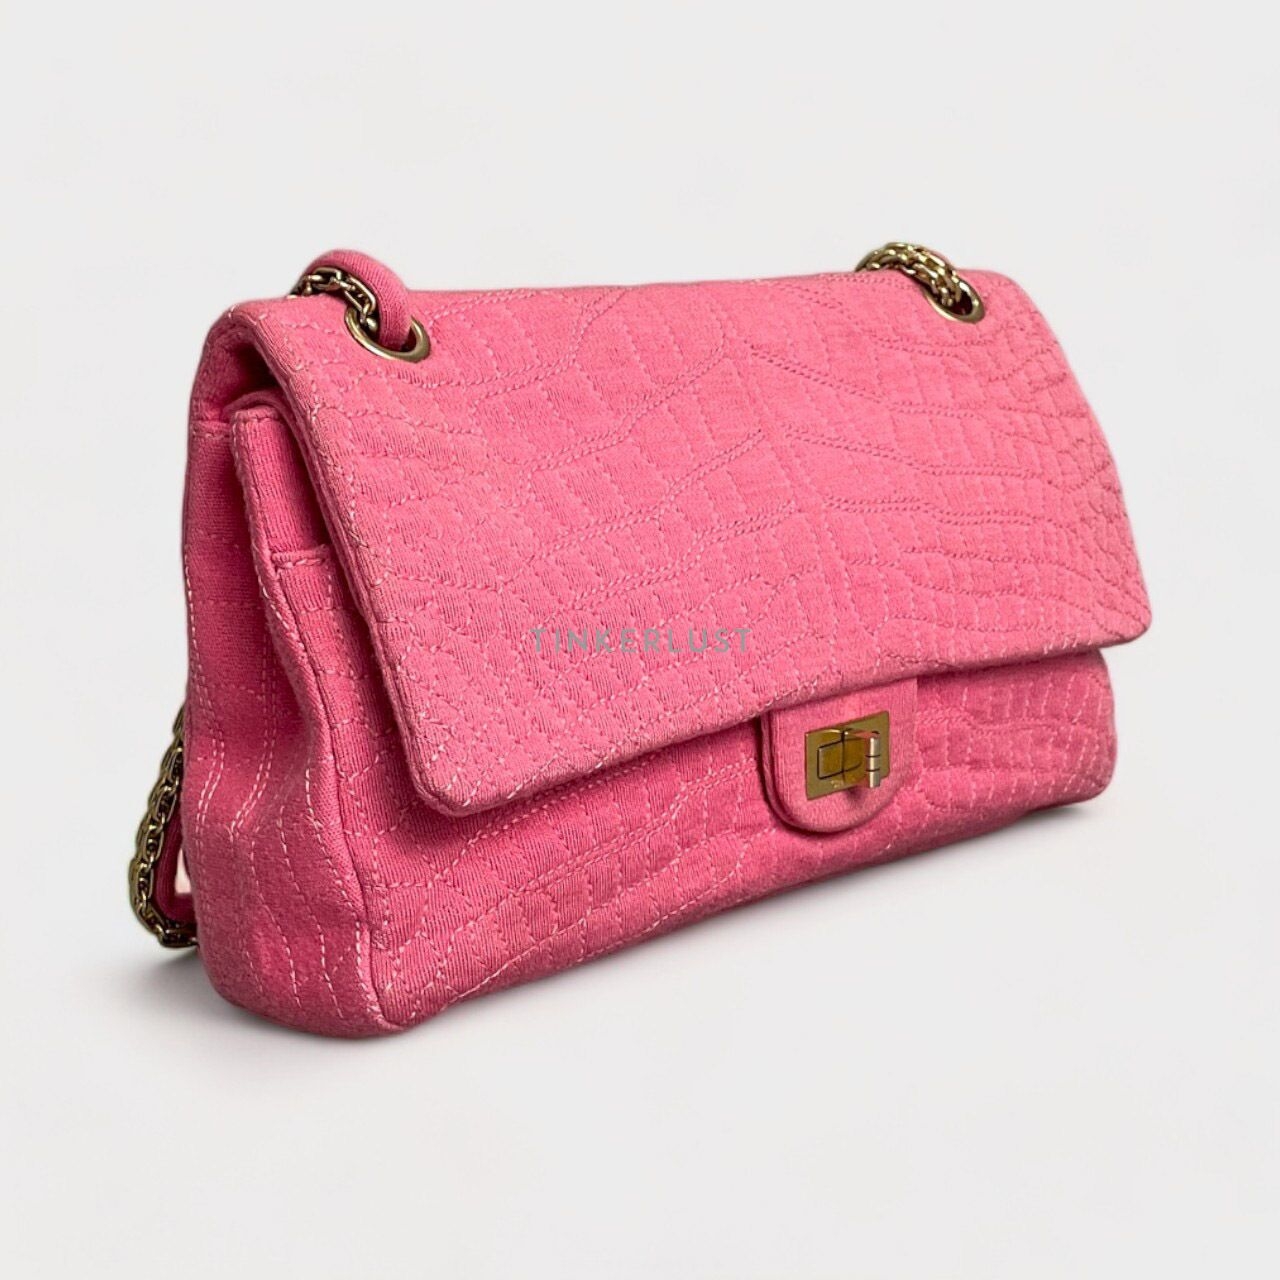 Chanel Reissue Pink Jersey Croco #11 GHW Shoulder Bag